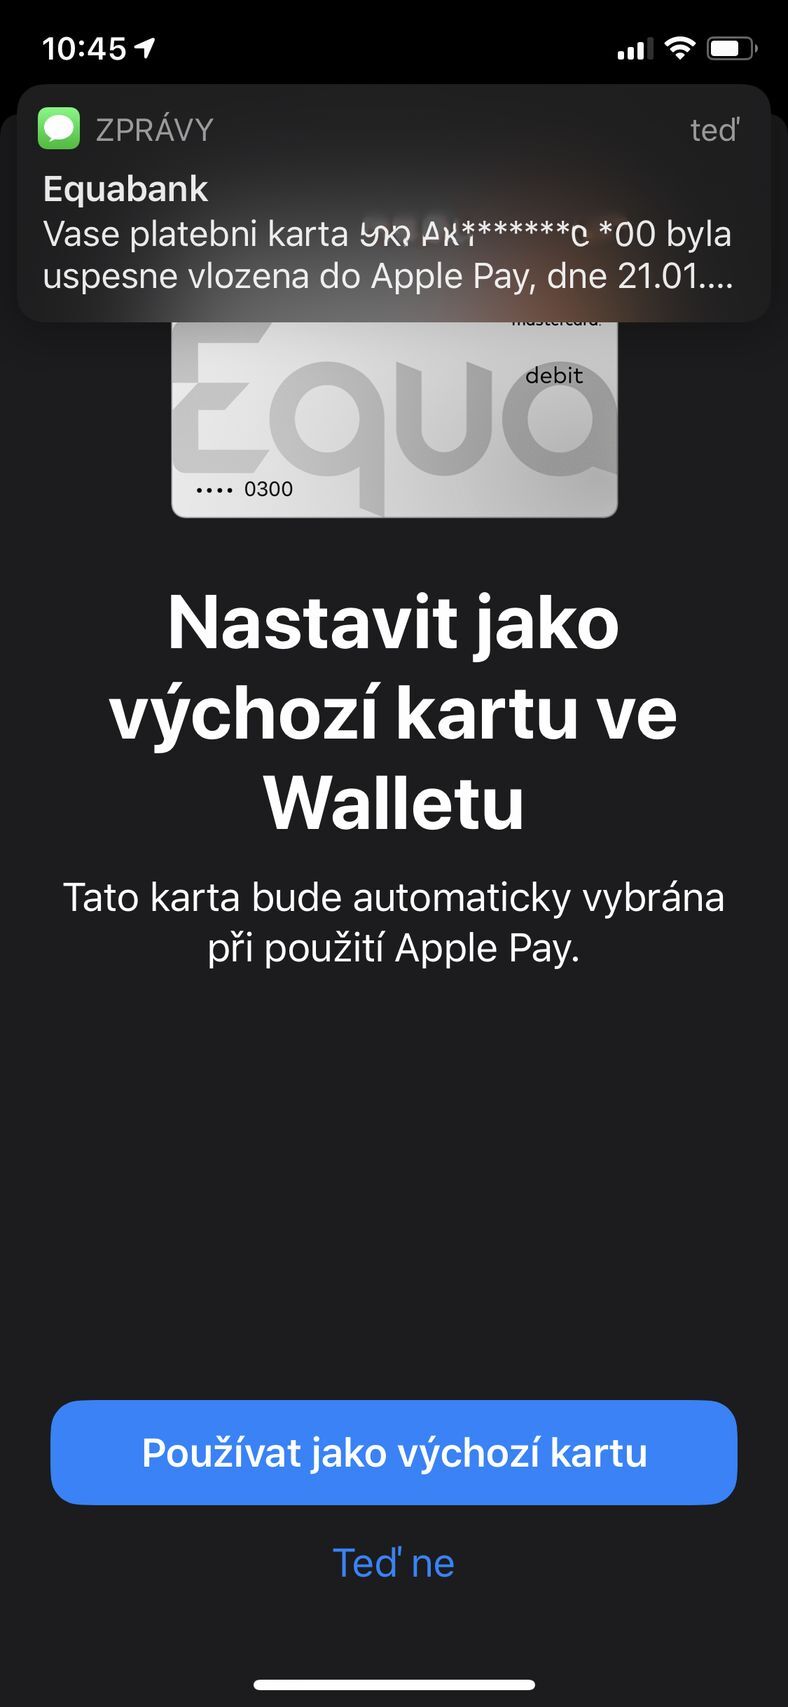 Equa bank - Apple Pay aktivace